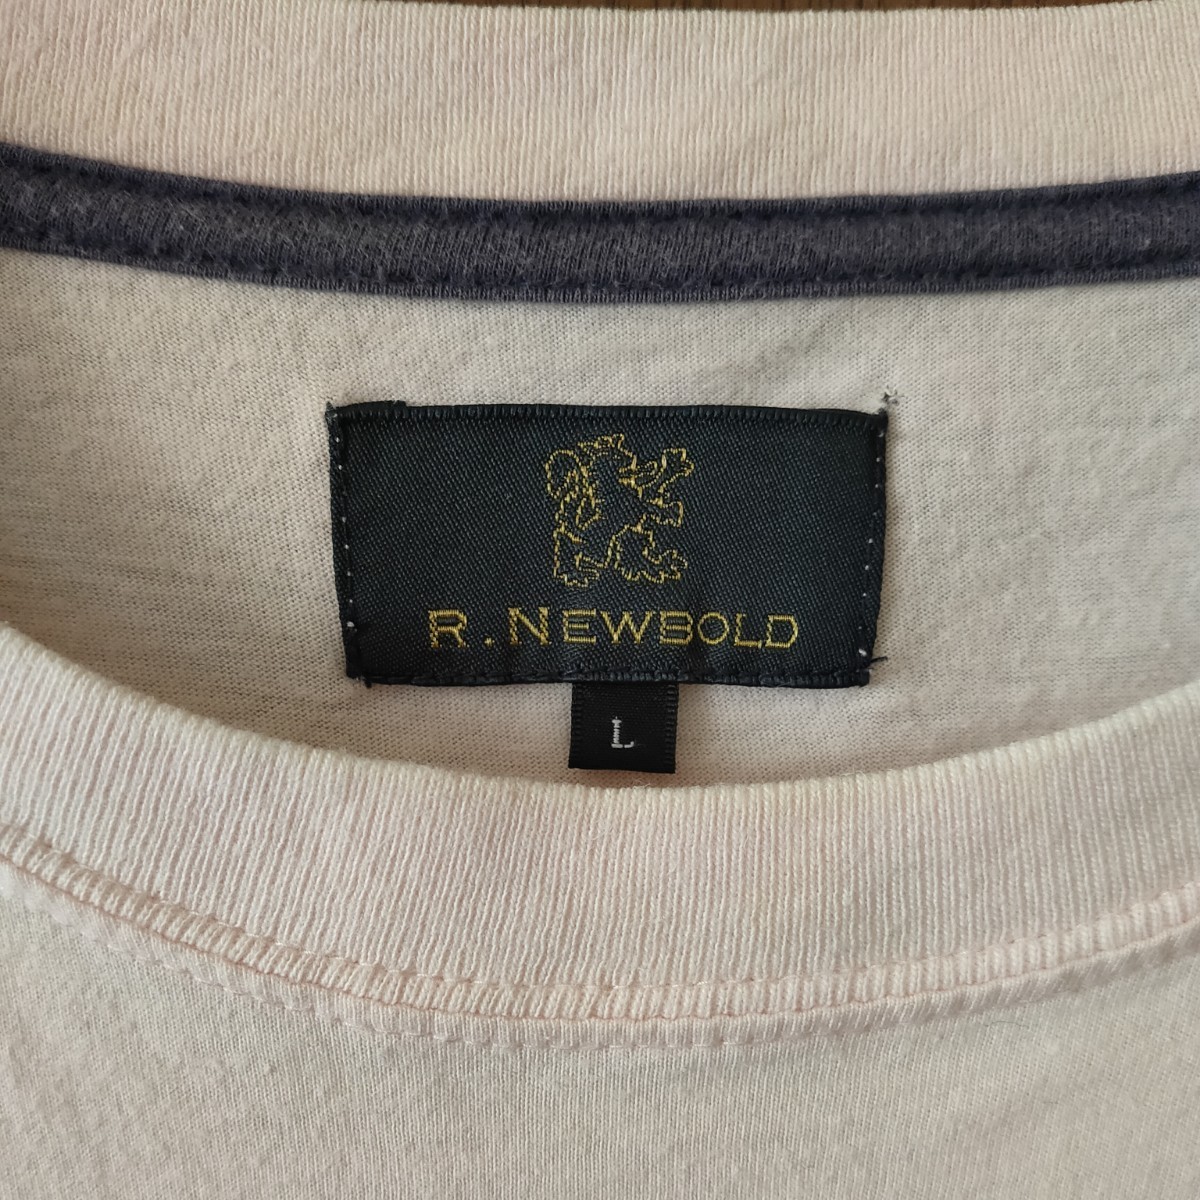 【Lサイズ】 R.NEWBOLD　半袖　Tシャツ